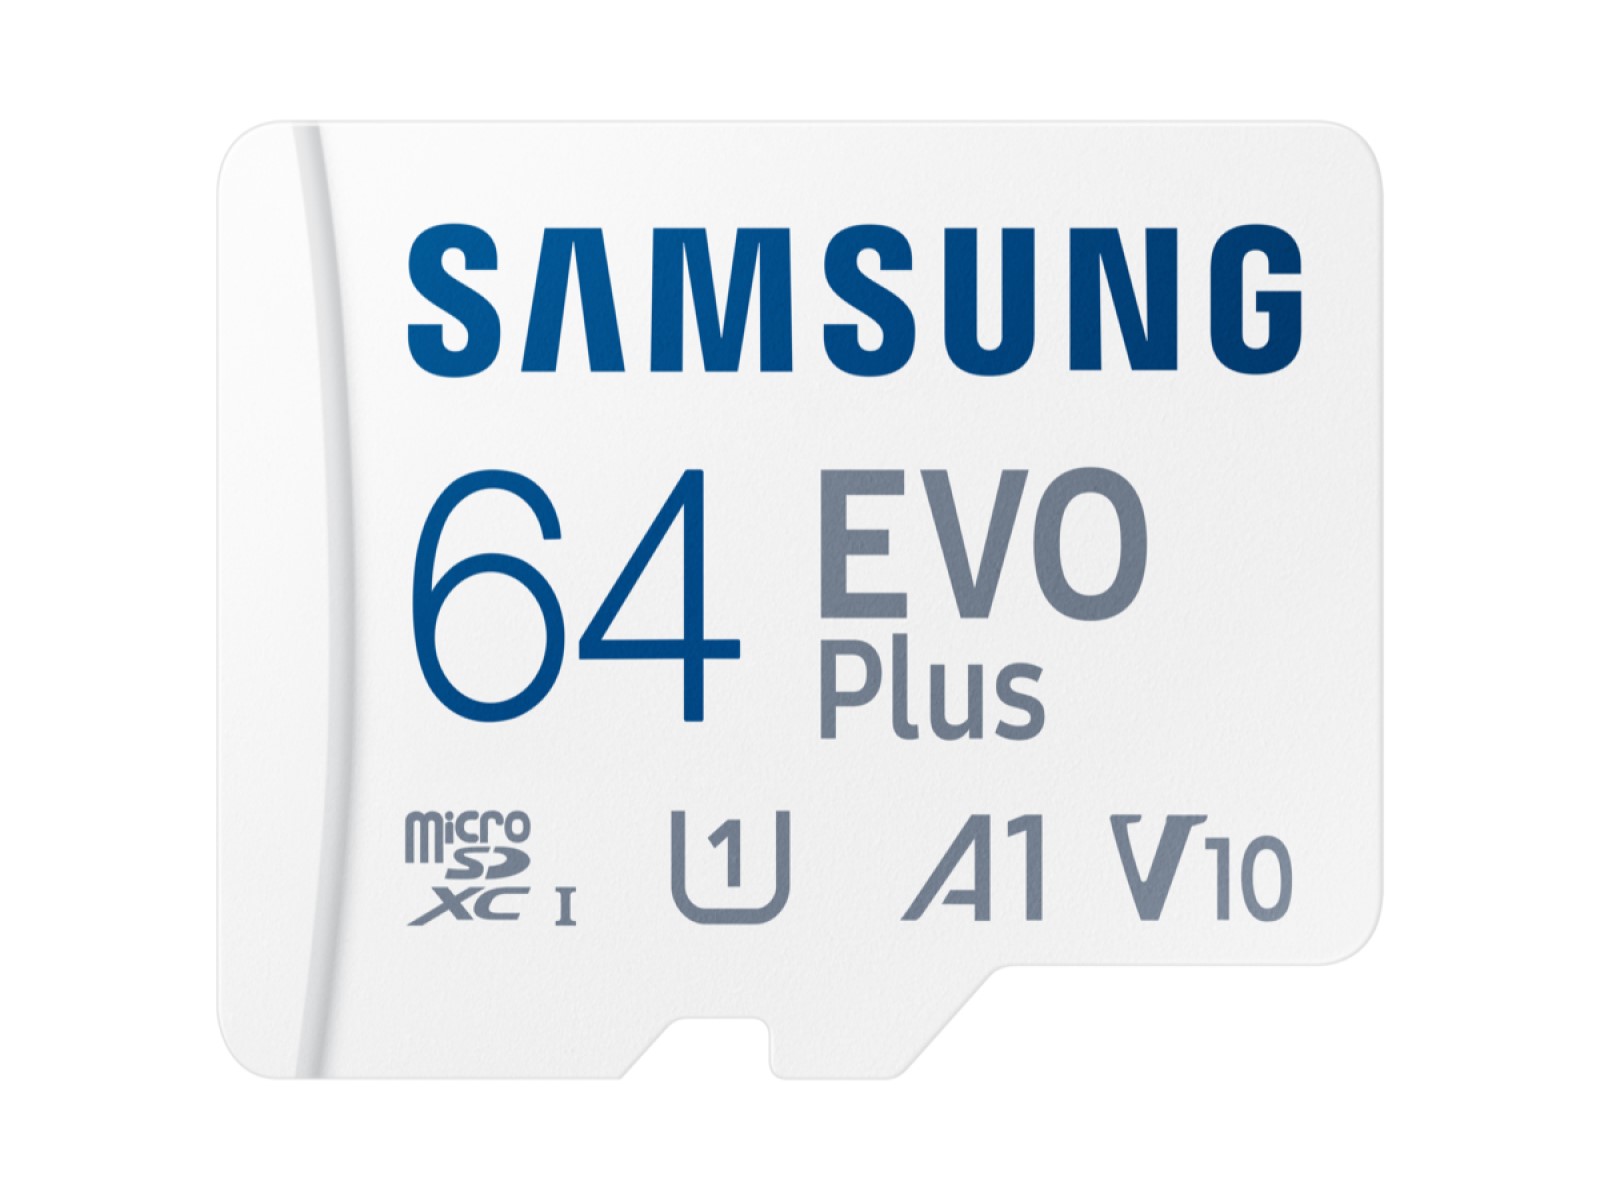 SSD 860 EVO 2.5